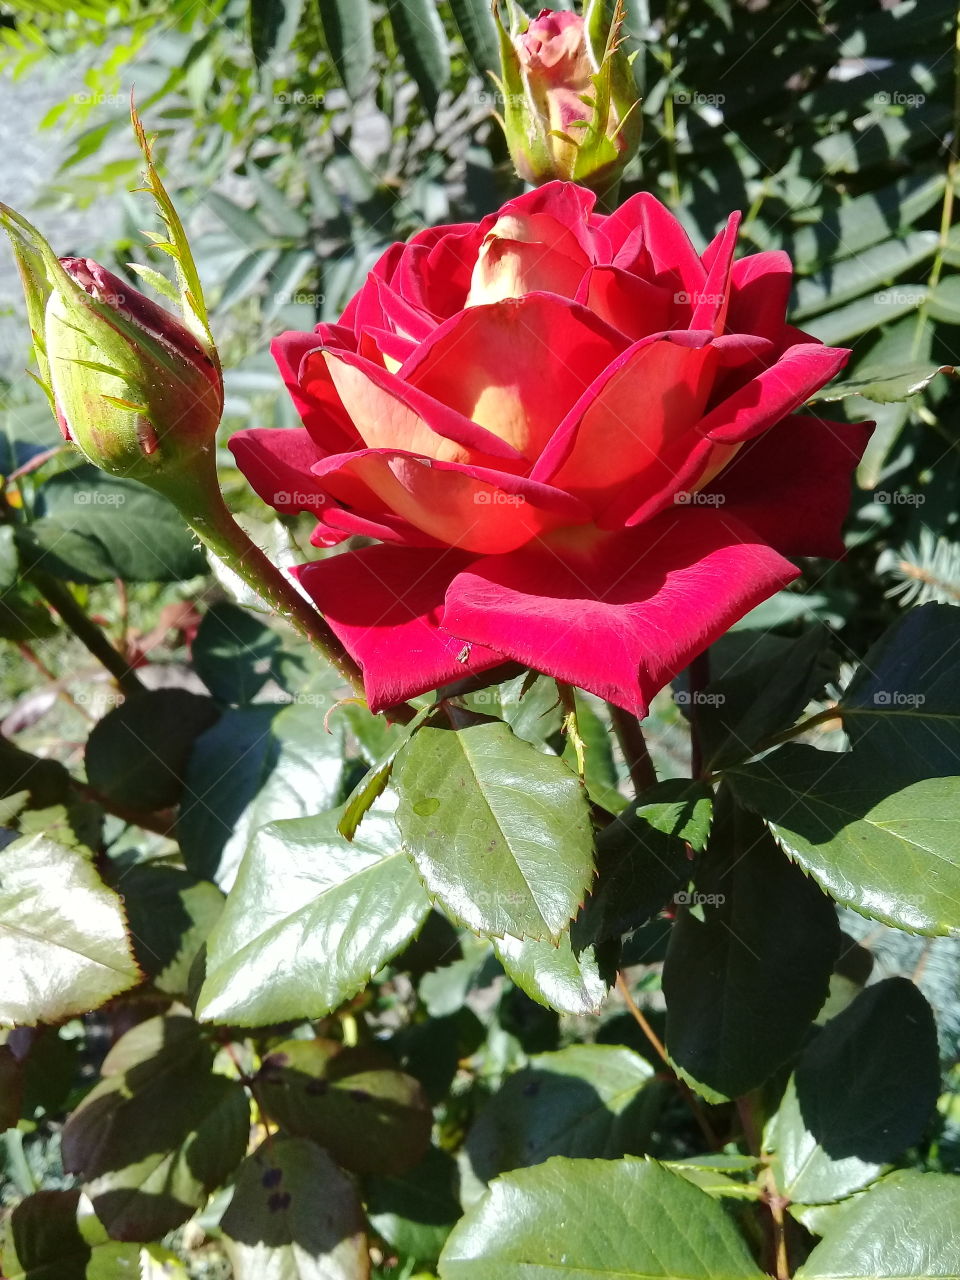 My rose.